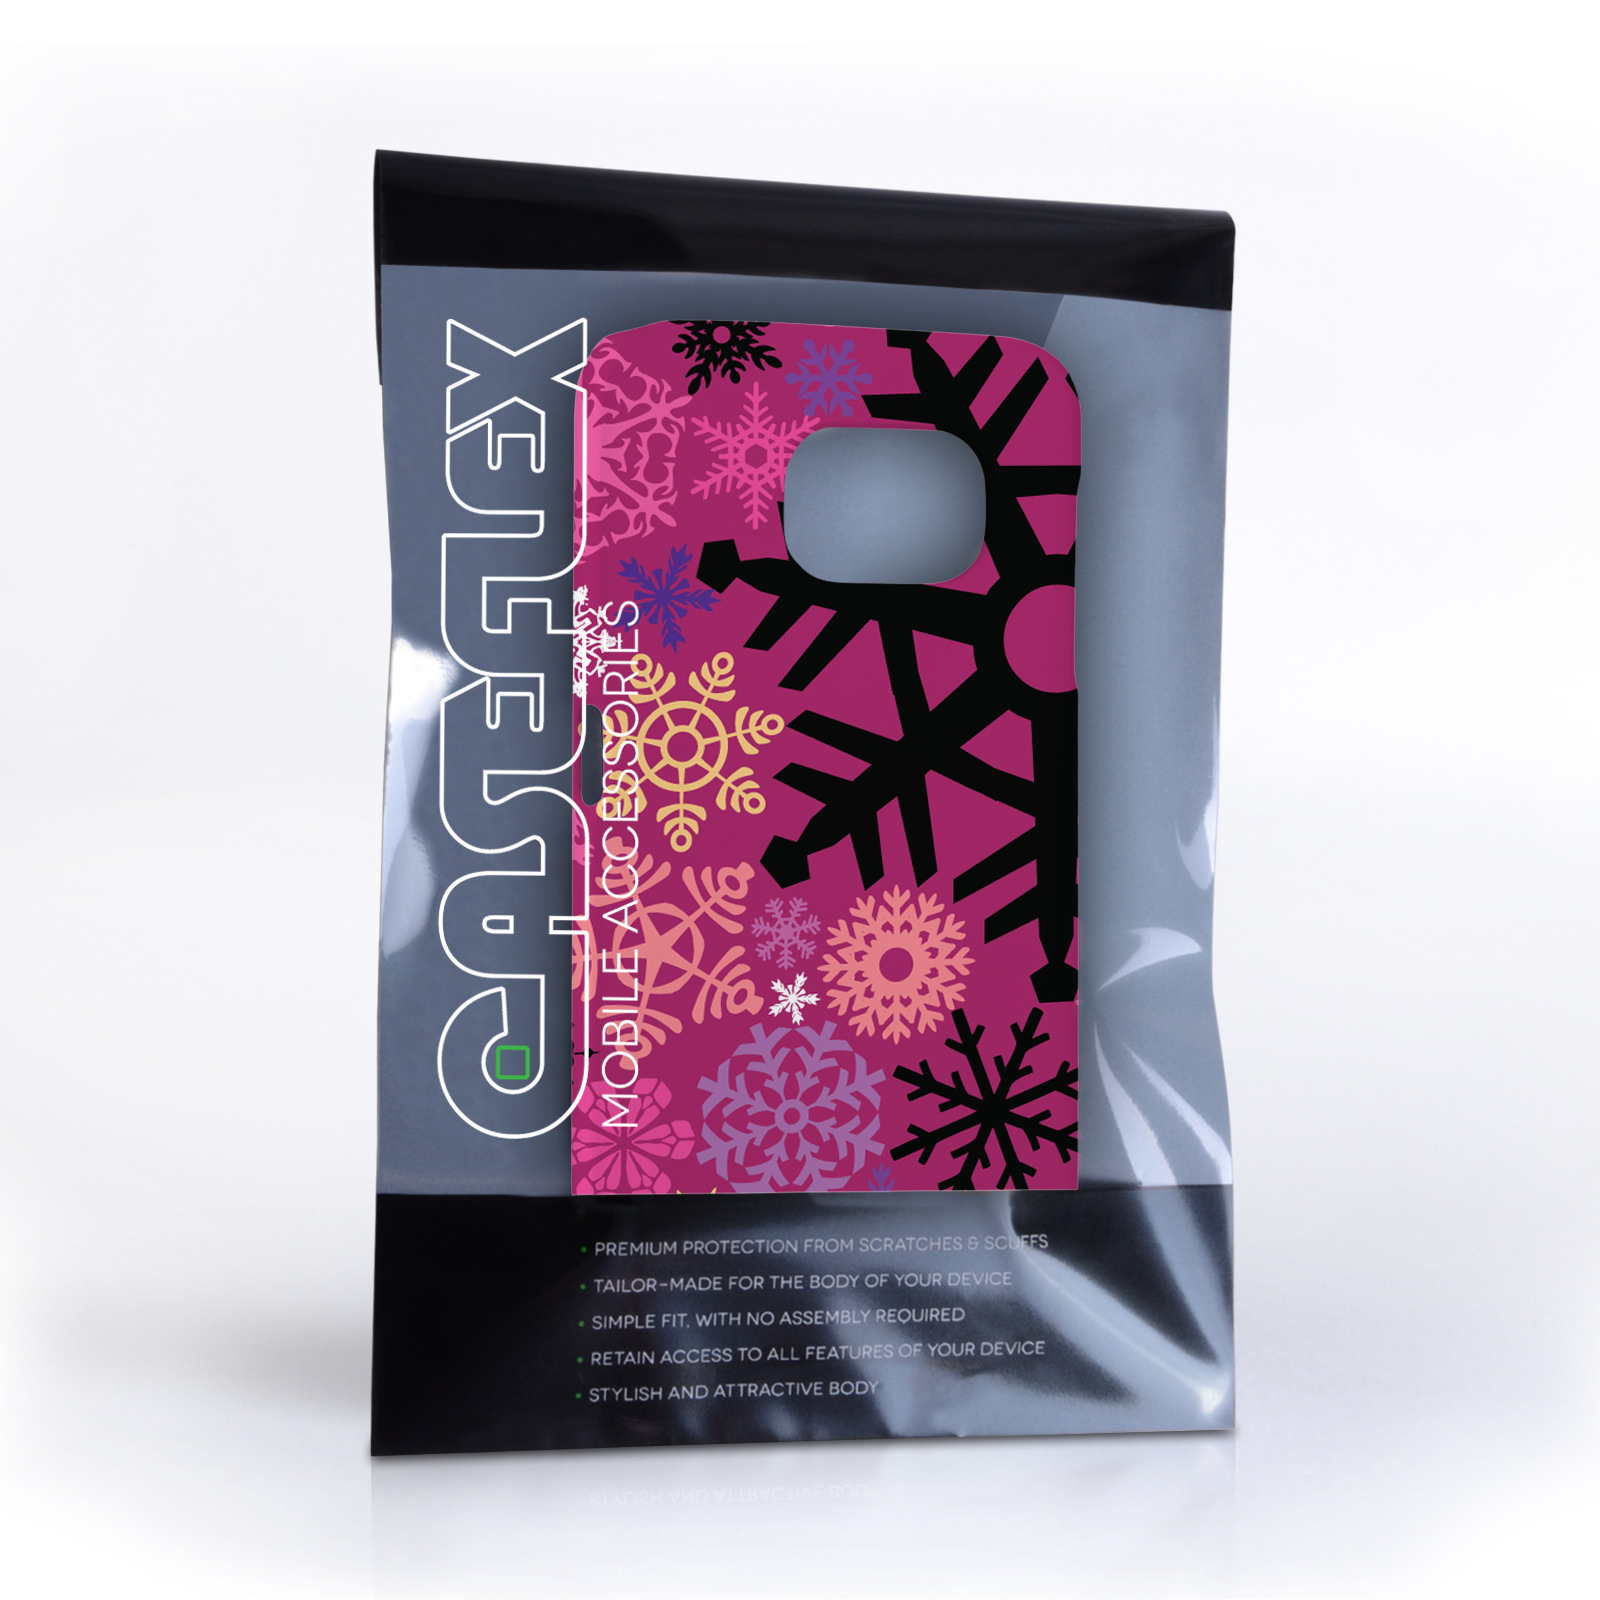 Caseflex Samsung Galaxy S6 Christmas Winter Snowflake Hard Case - Burgundy